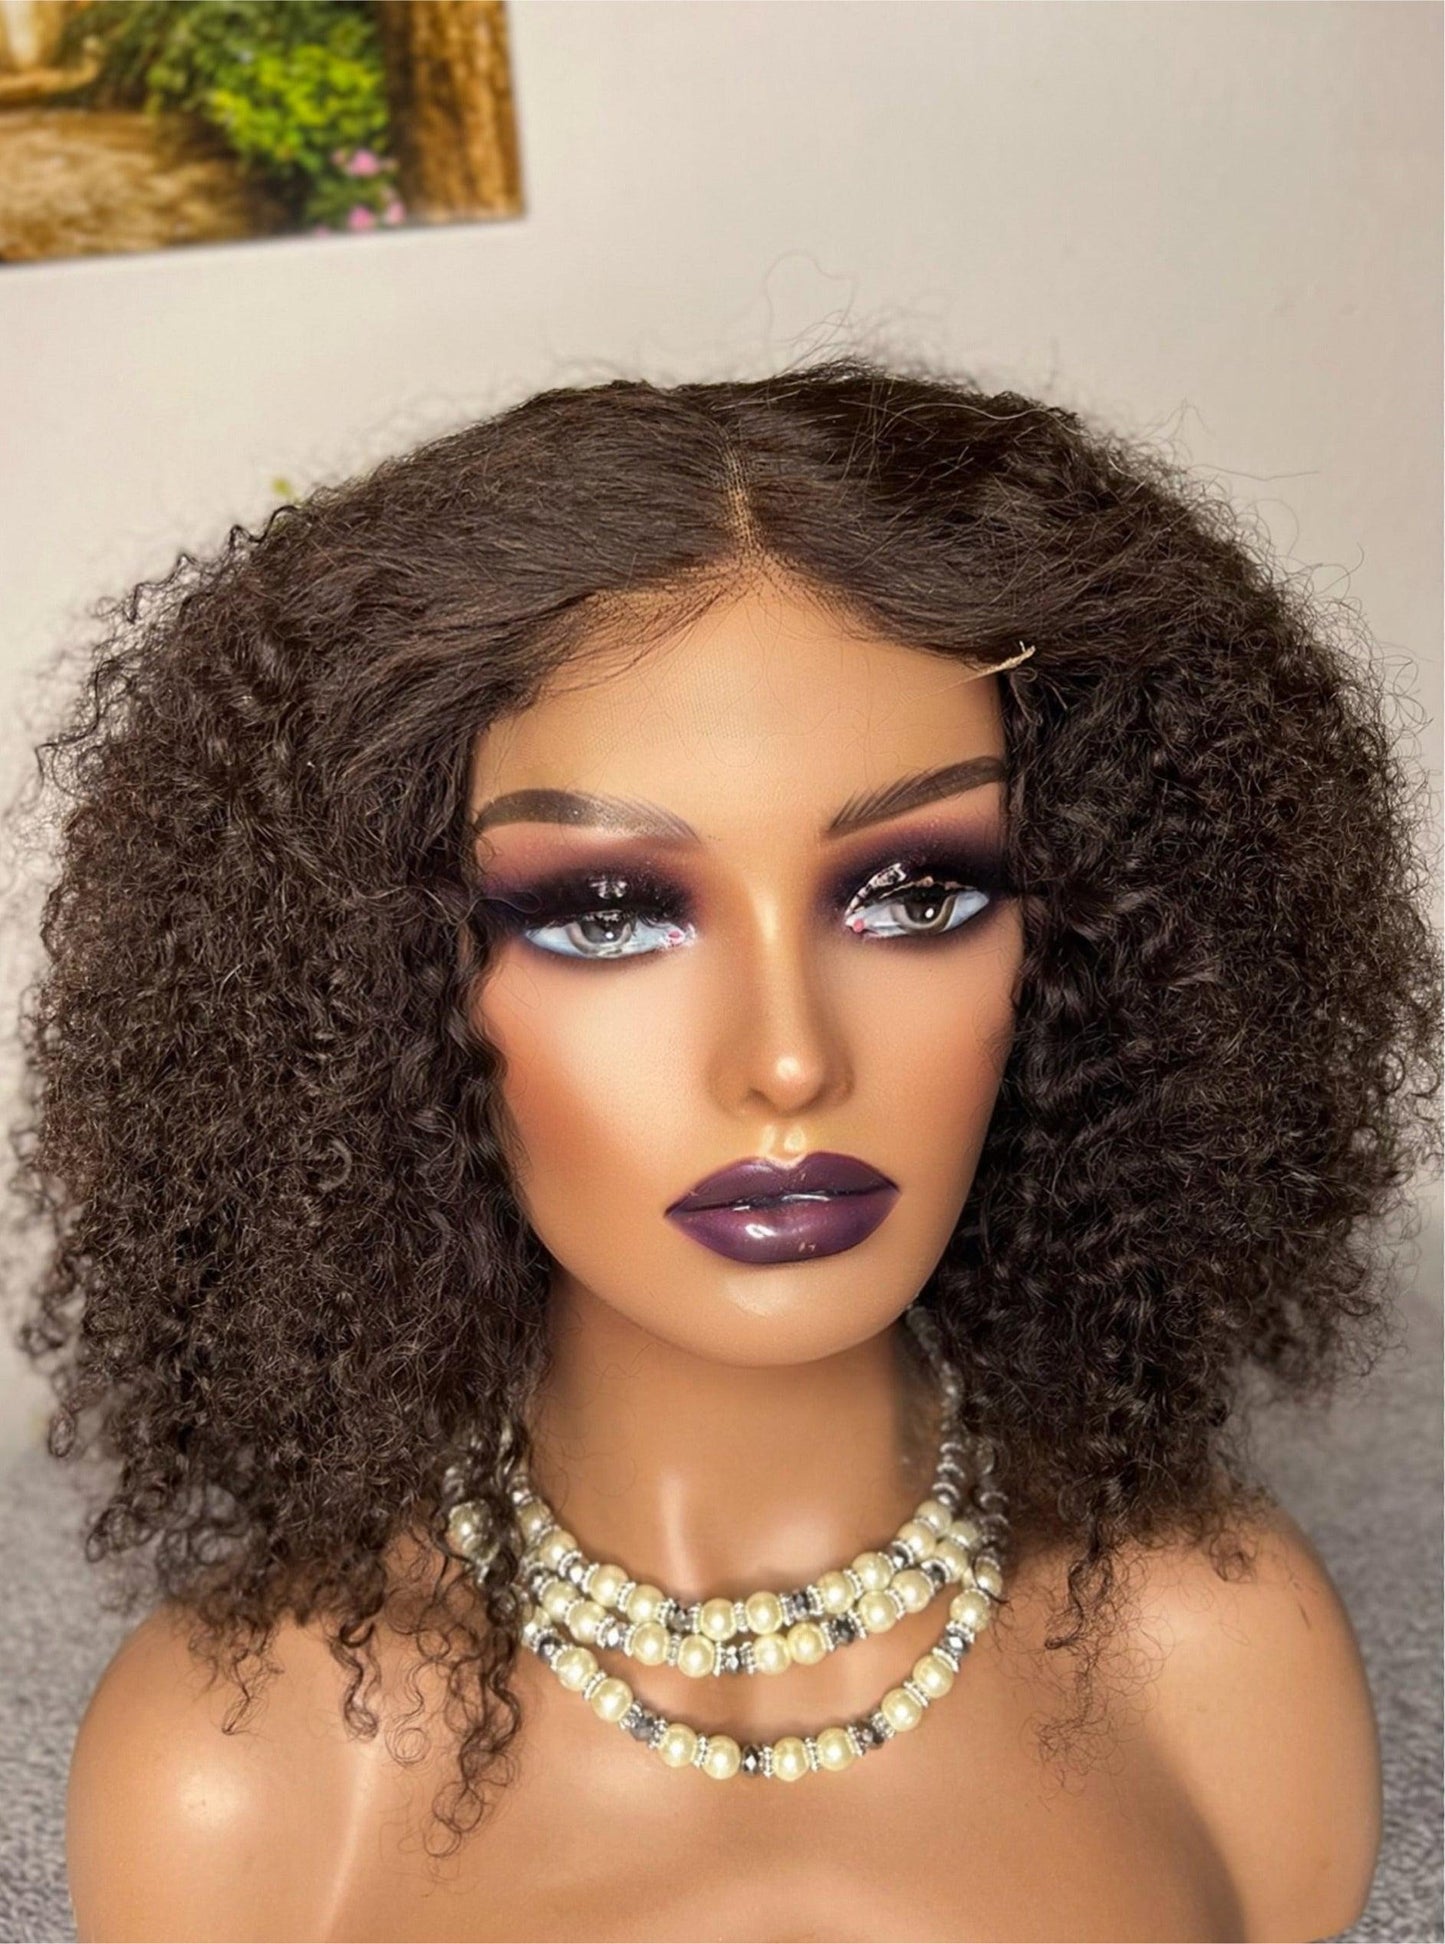 Afro curl wig - Osyhair